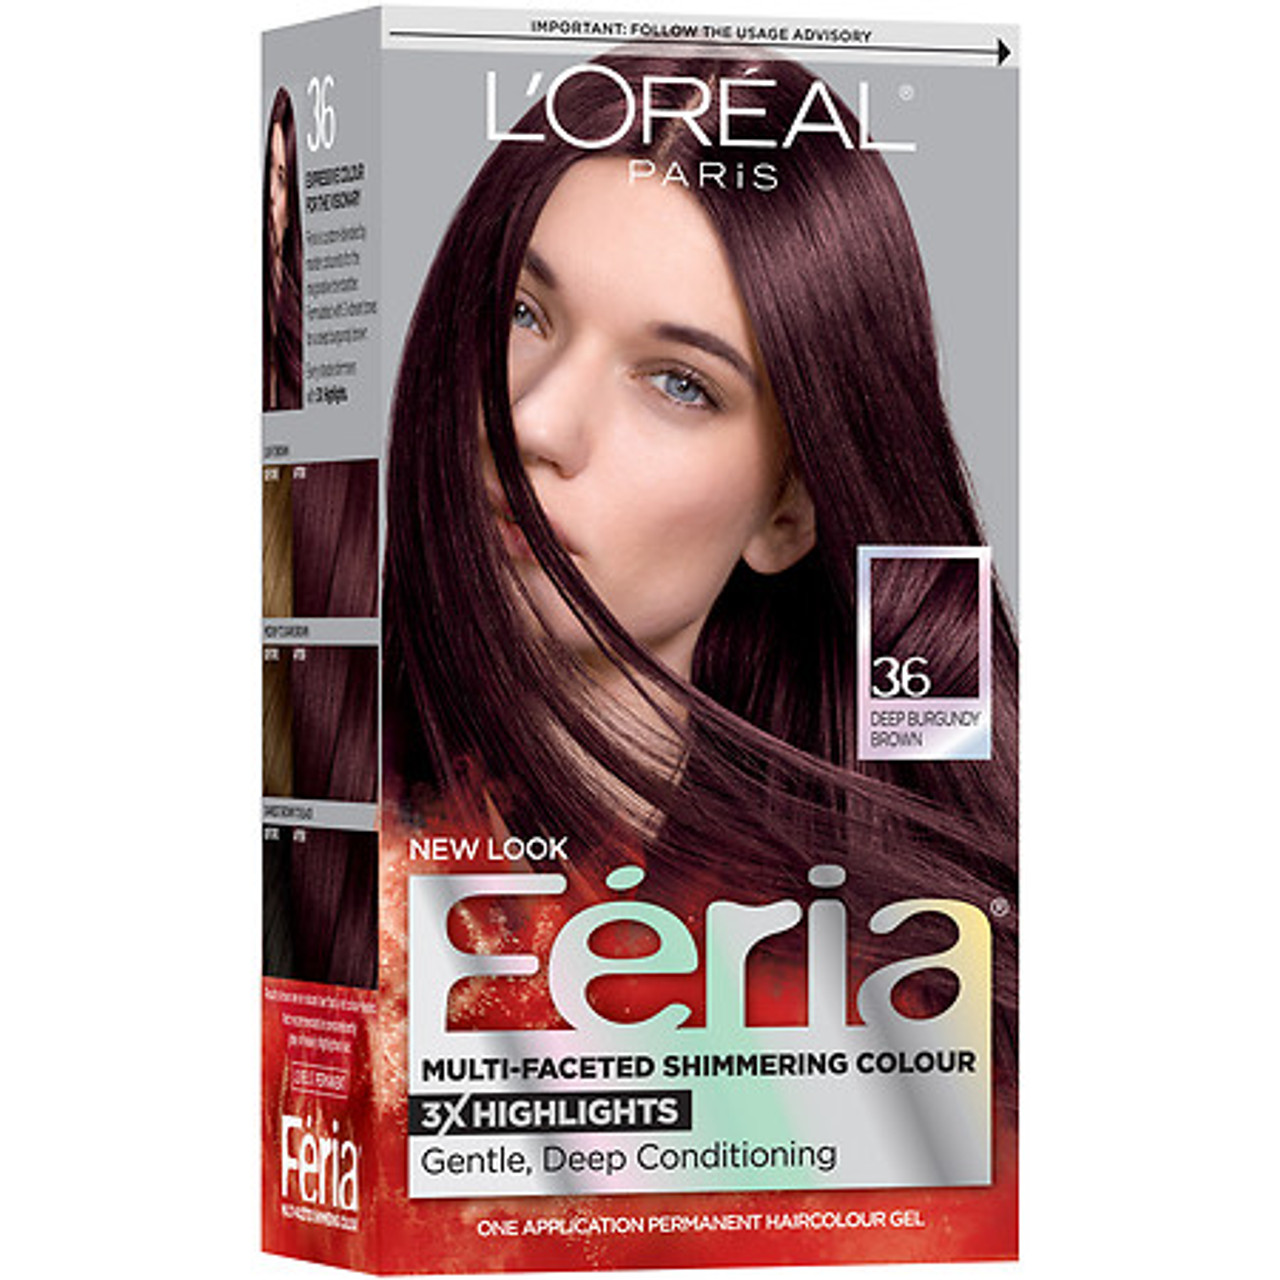 L Oreal Paris Feria Multi Faceted Shimmering Colour Permanent Haircolor Kit 36 Deep Burgundy Brown